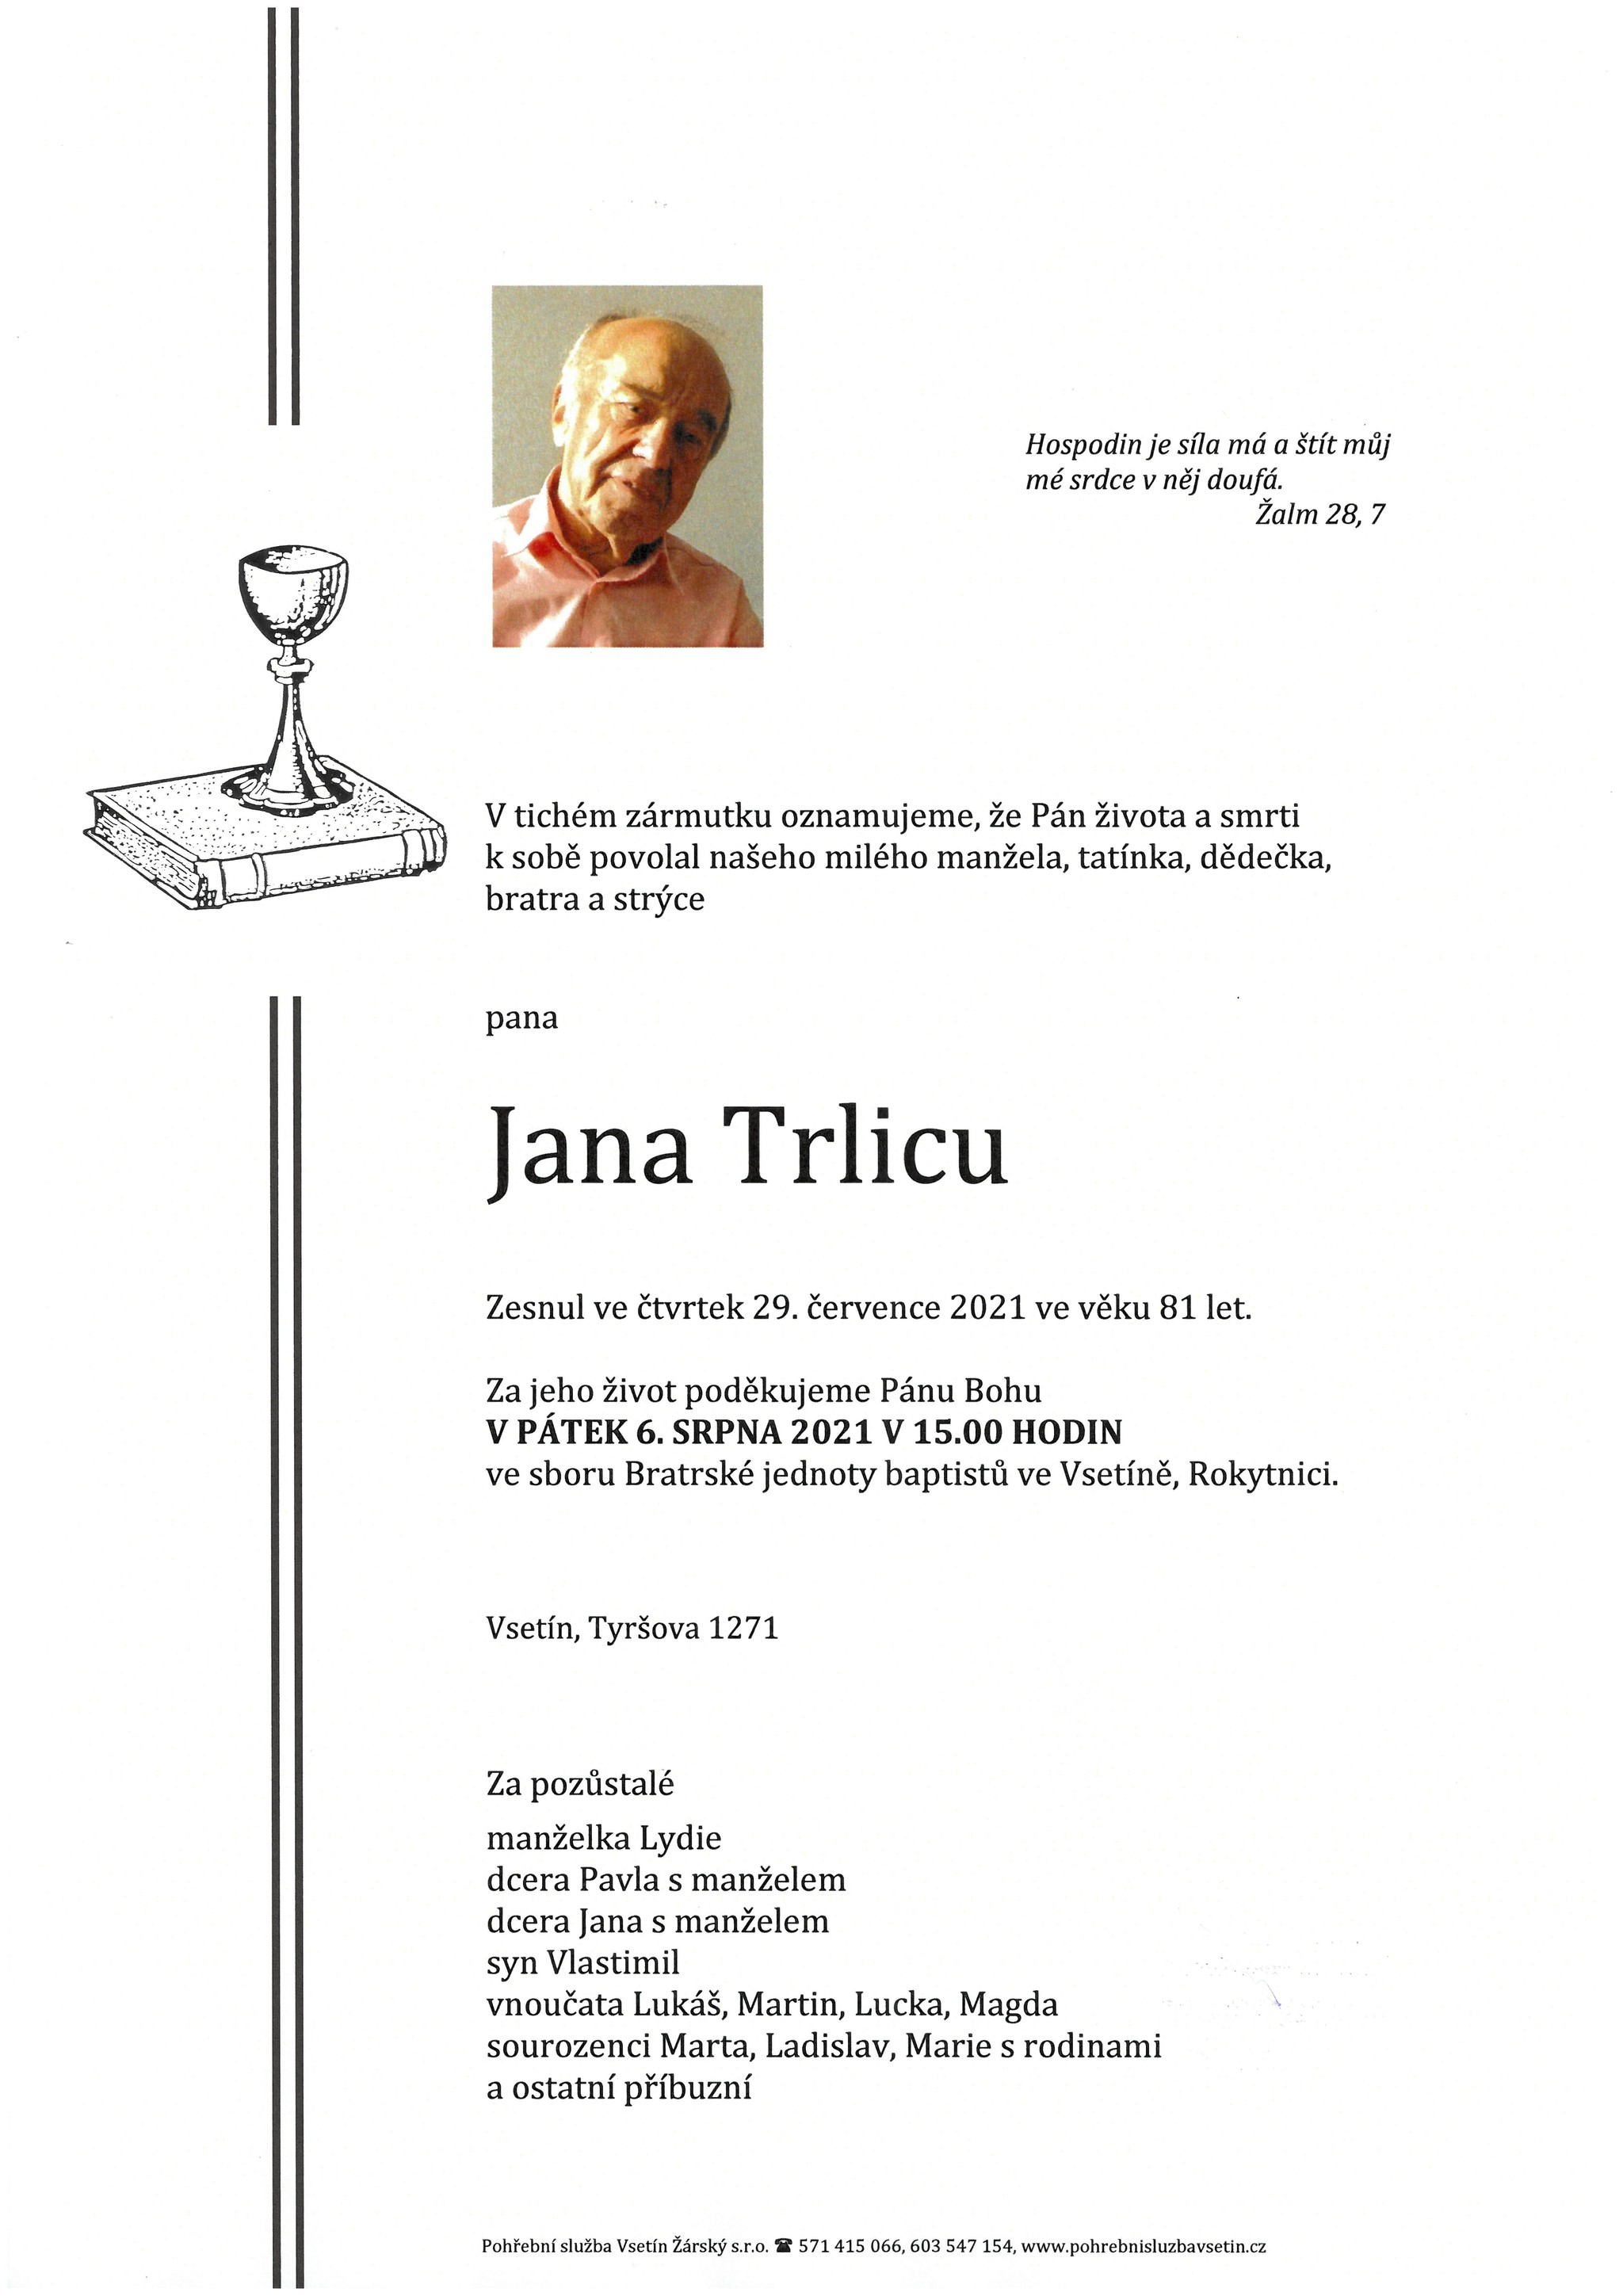 Jan Trlica